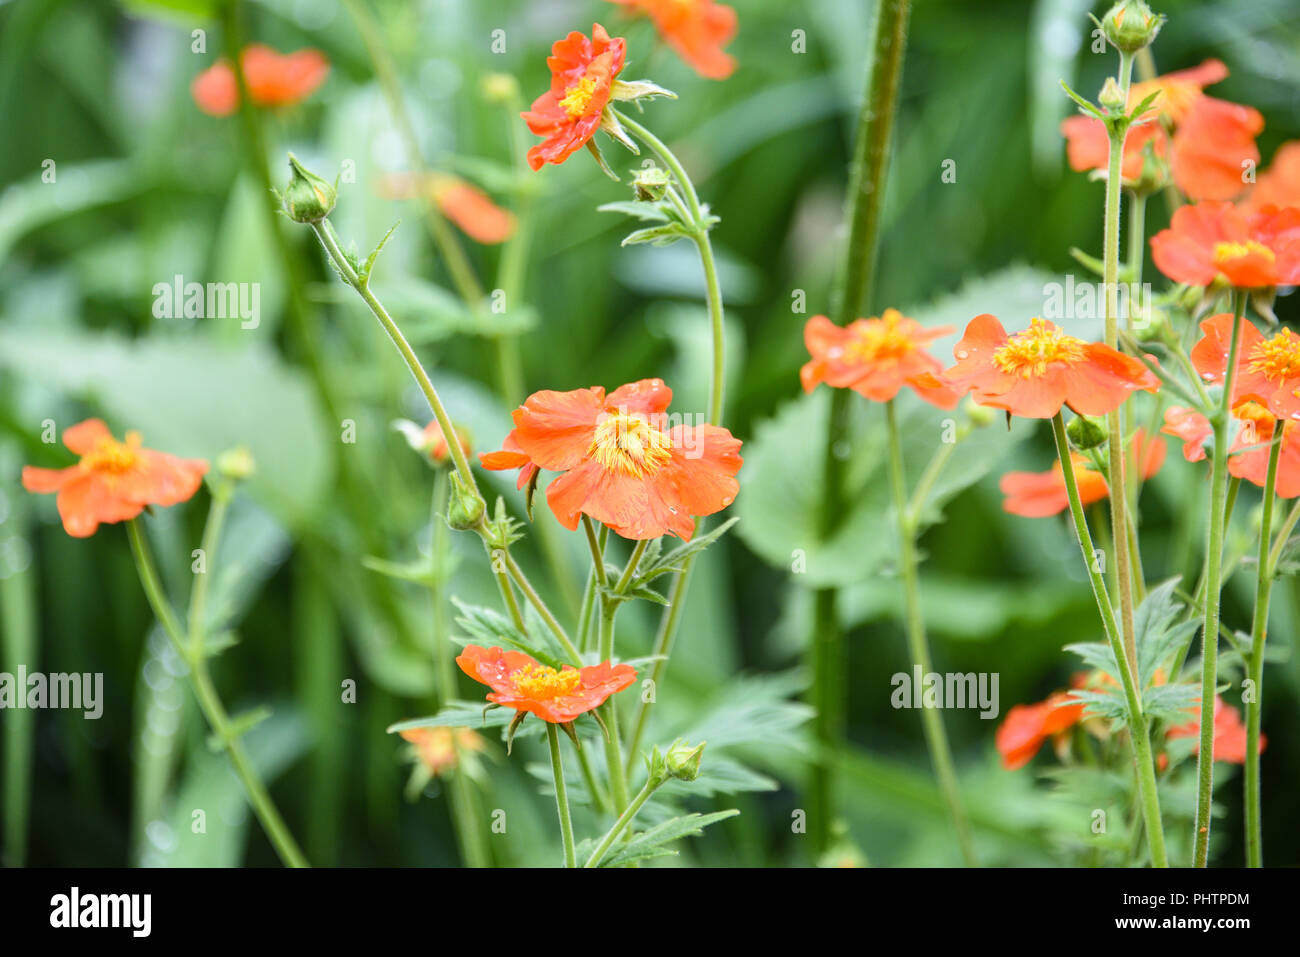 Red flower avens Geum aleppicum in the garden after rain Stock Photo